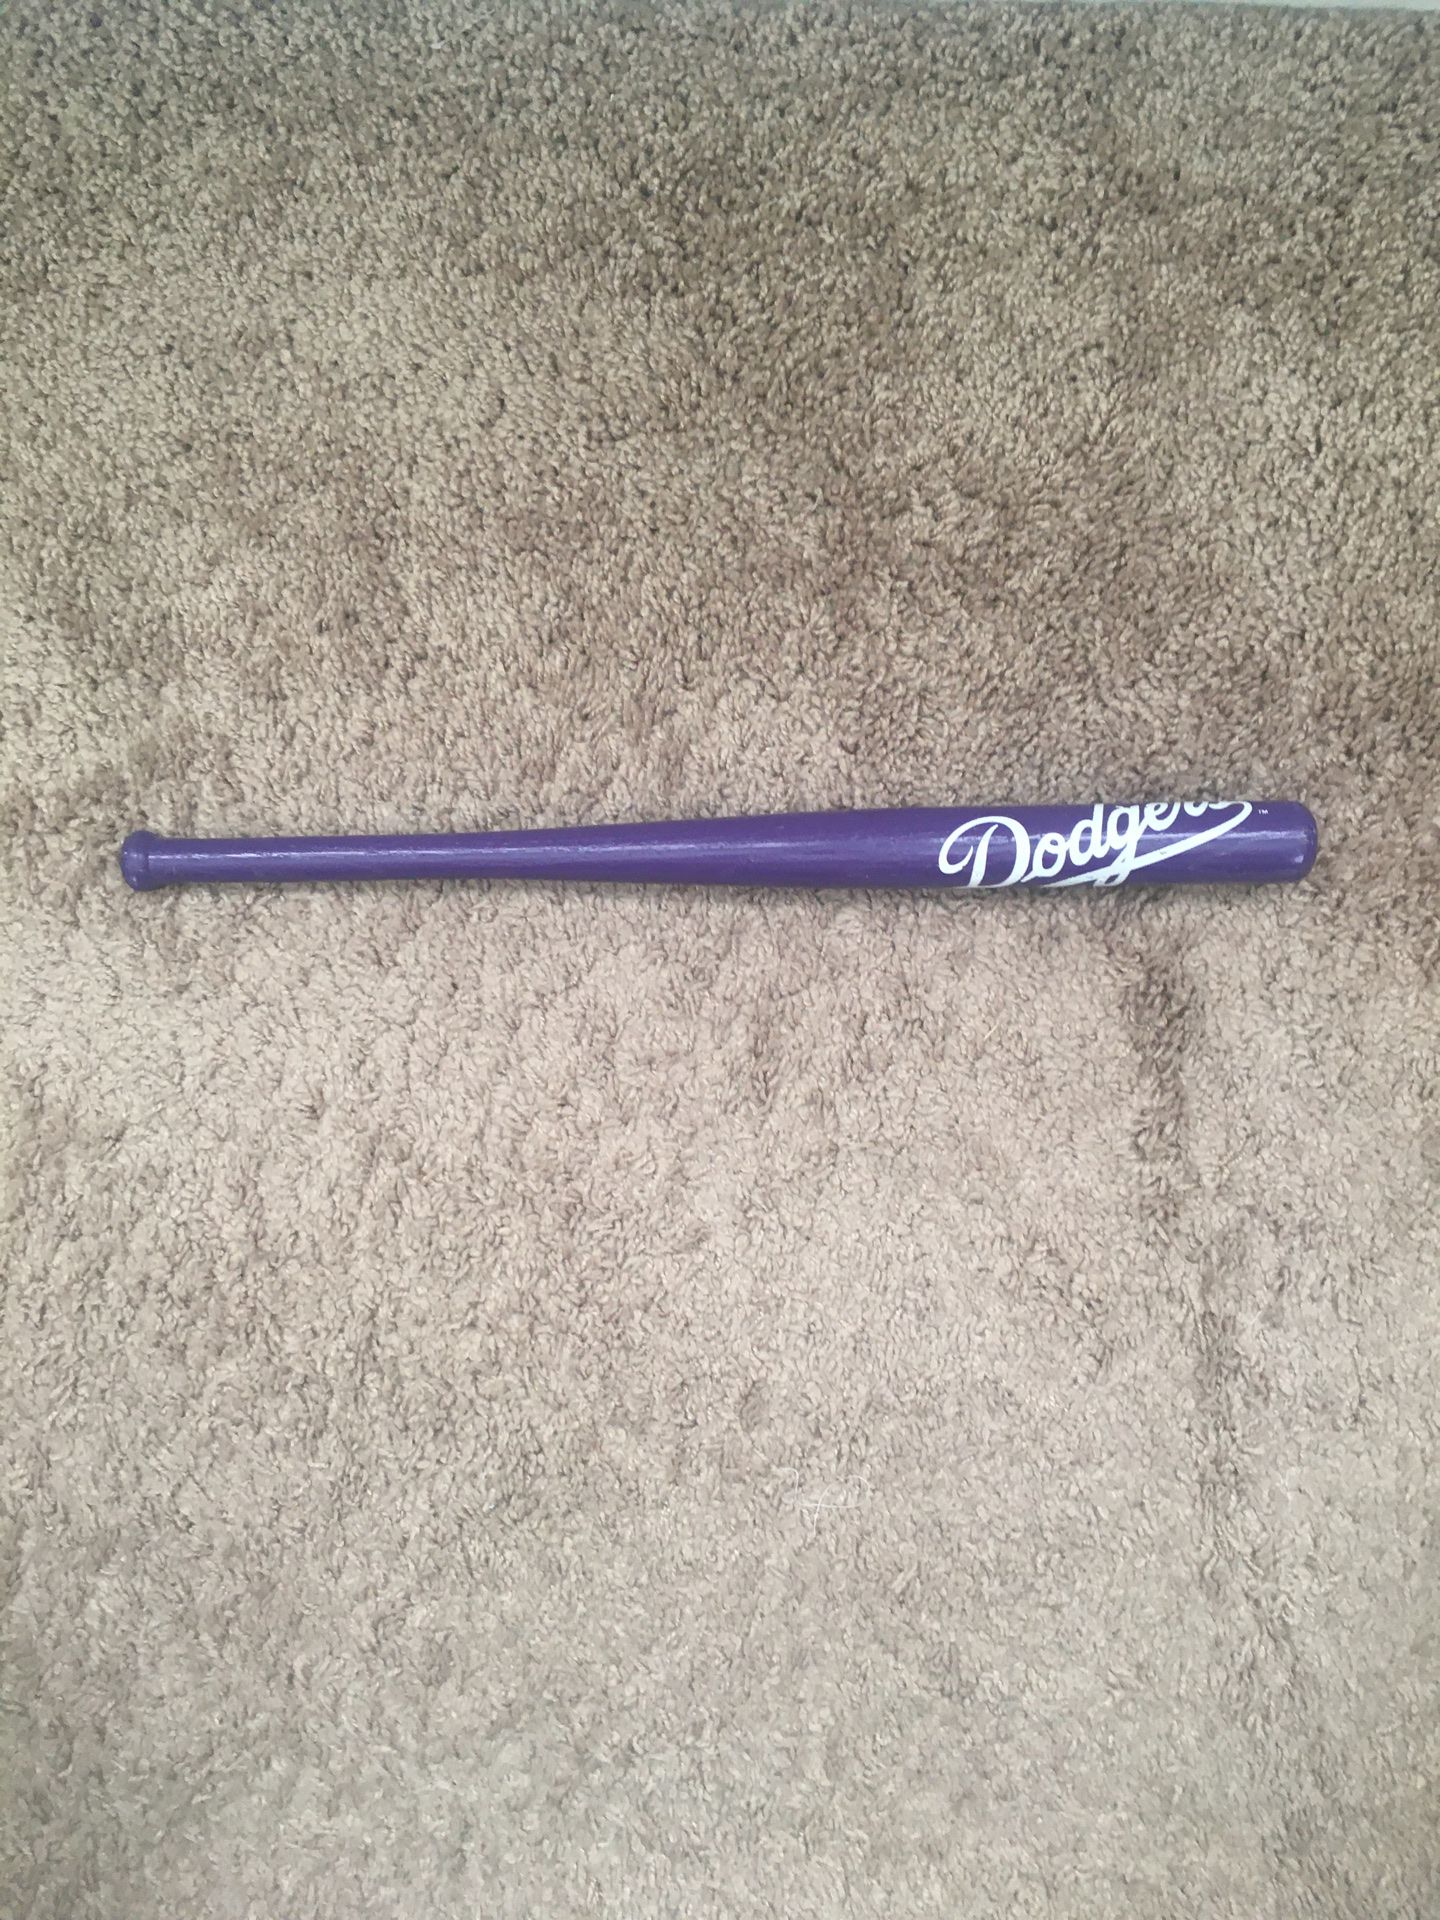 Dodgers baseball bat